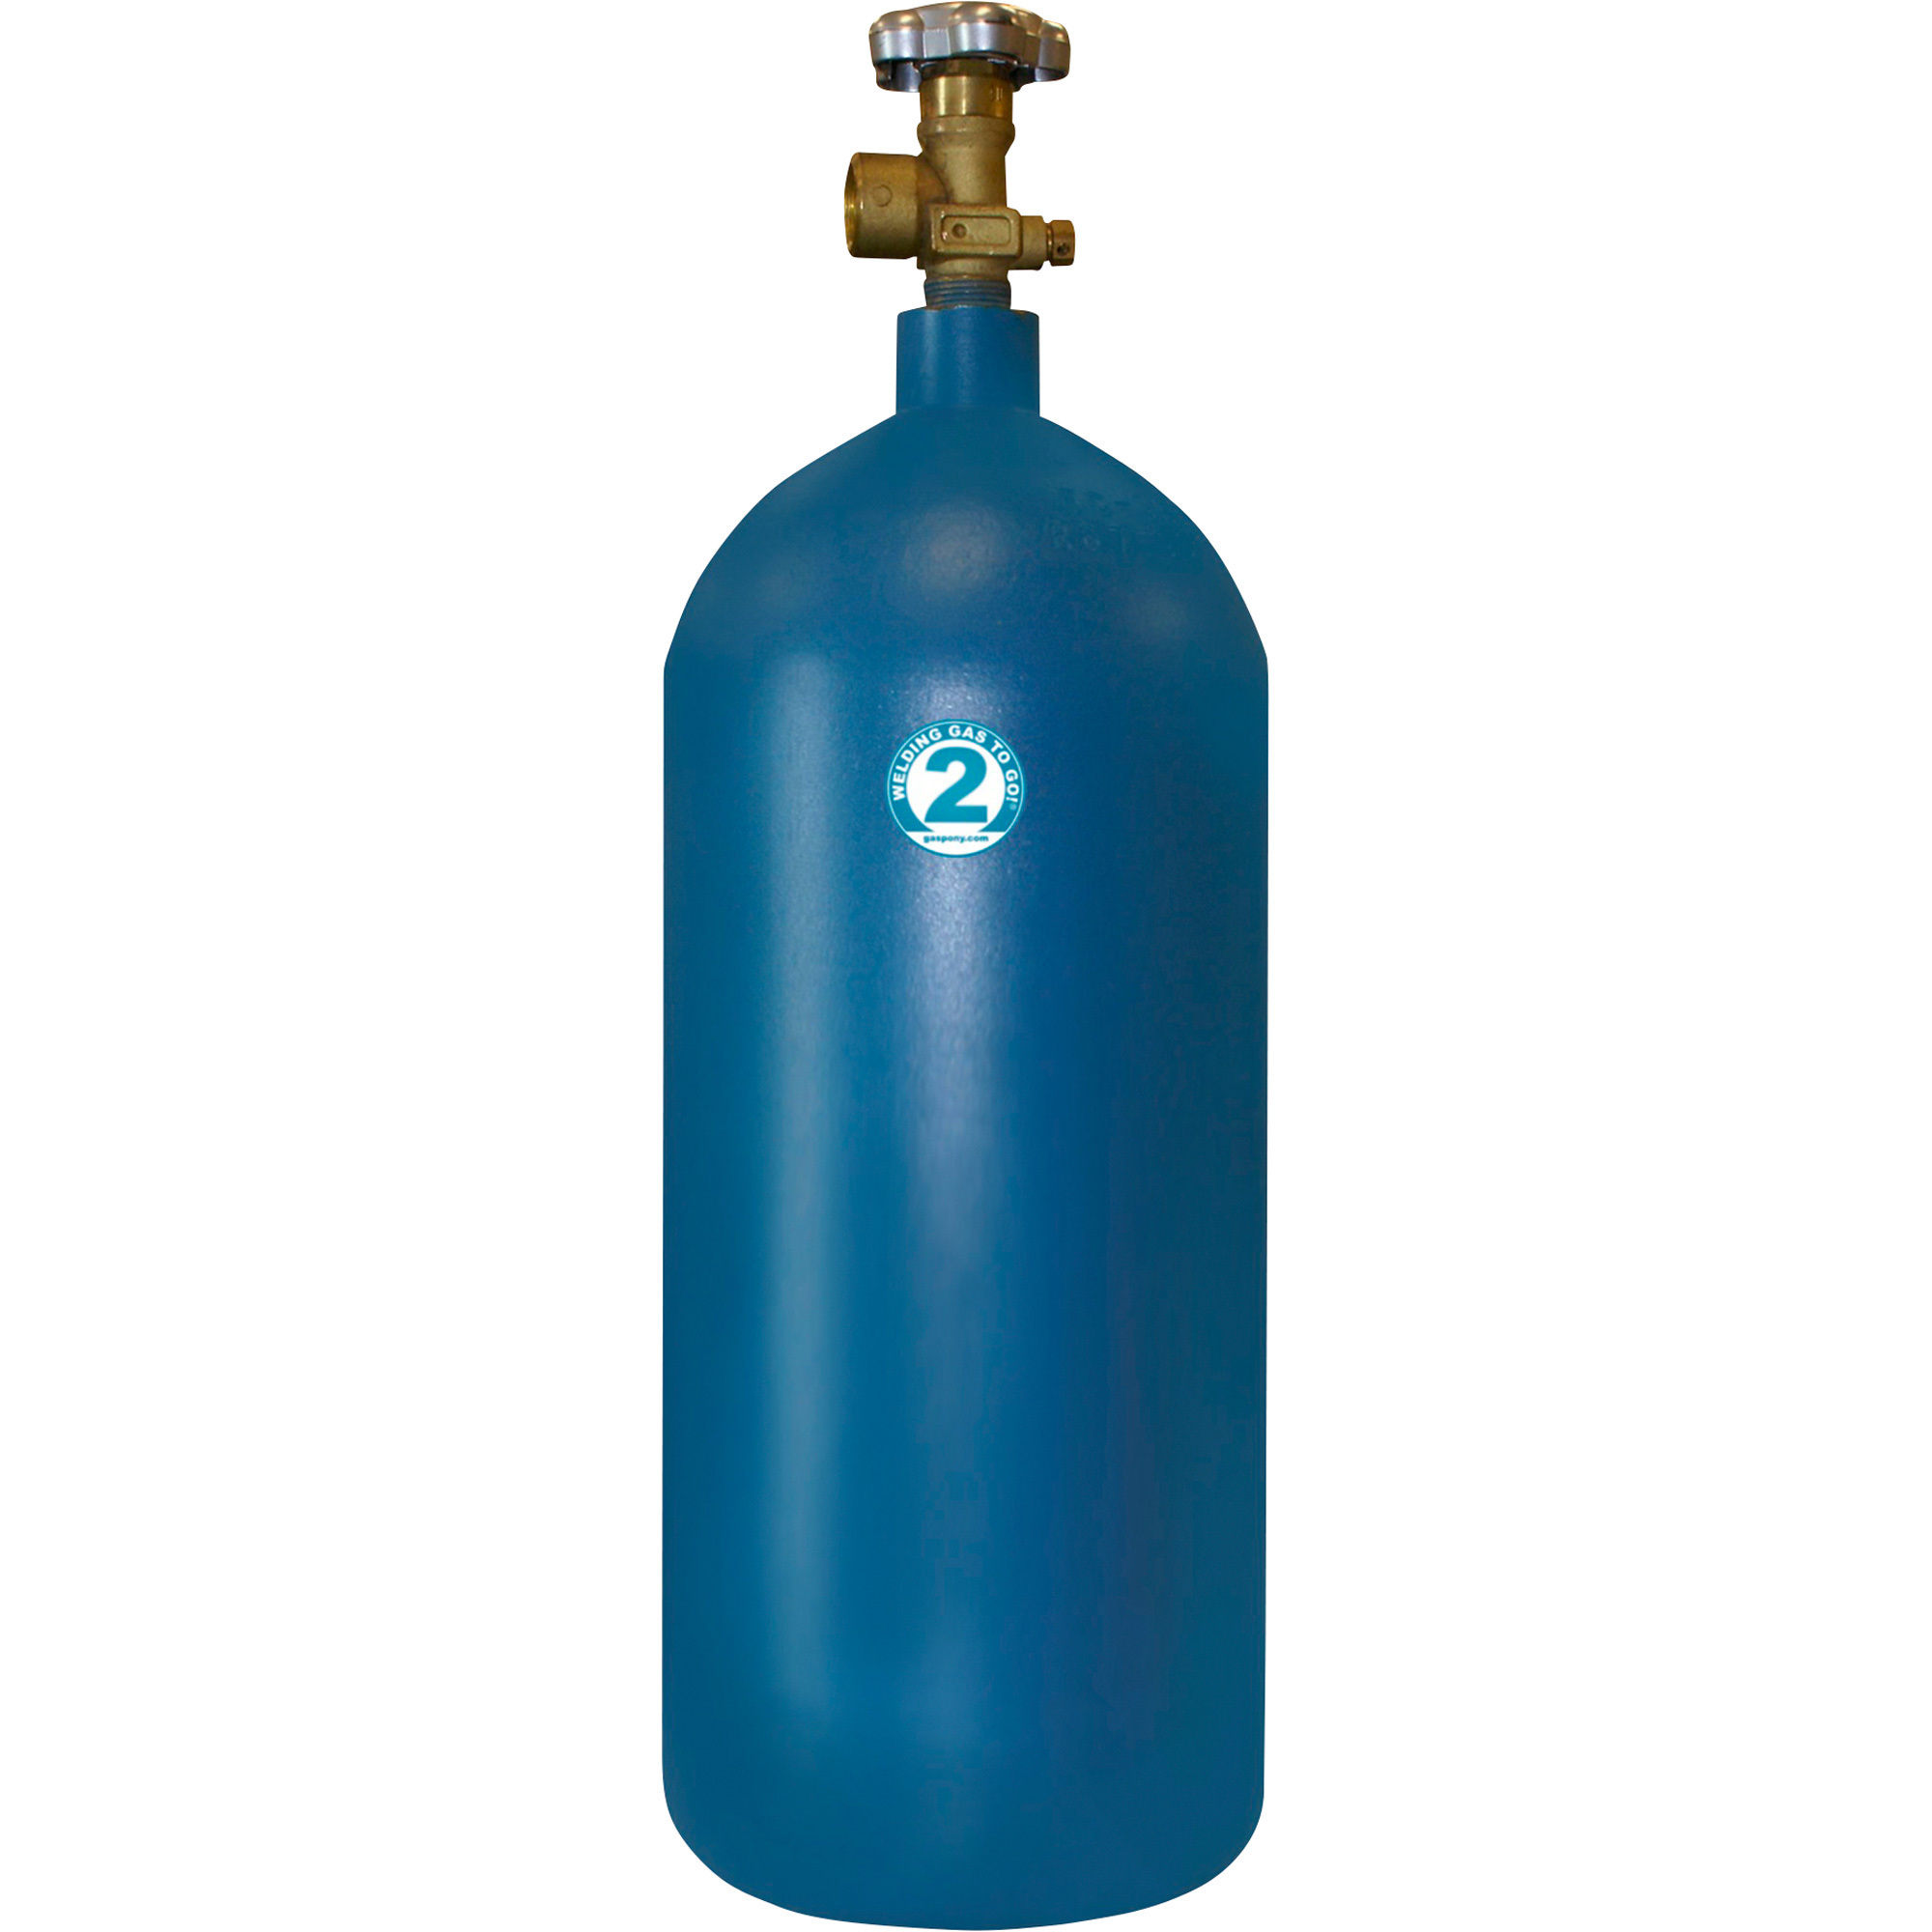 Thoroughbred 75/25 Argon/CO2 Gas Cylinder â Size #2, 40CF